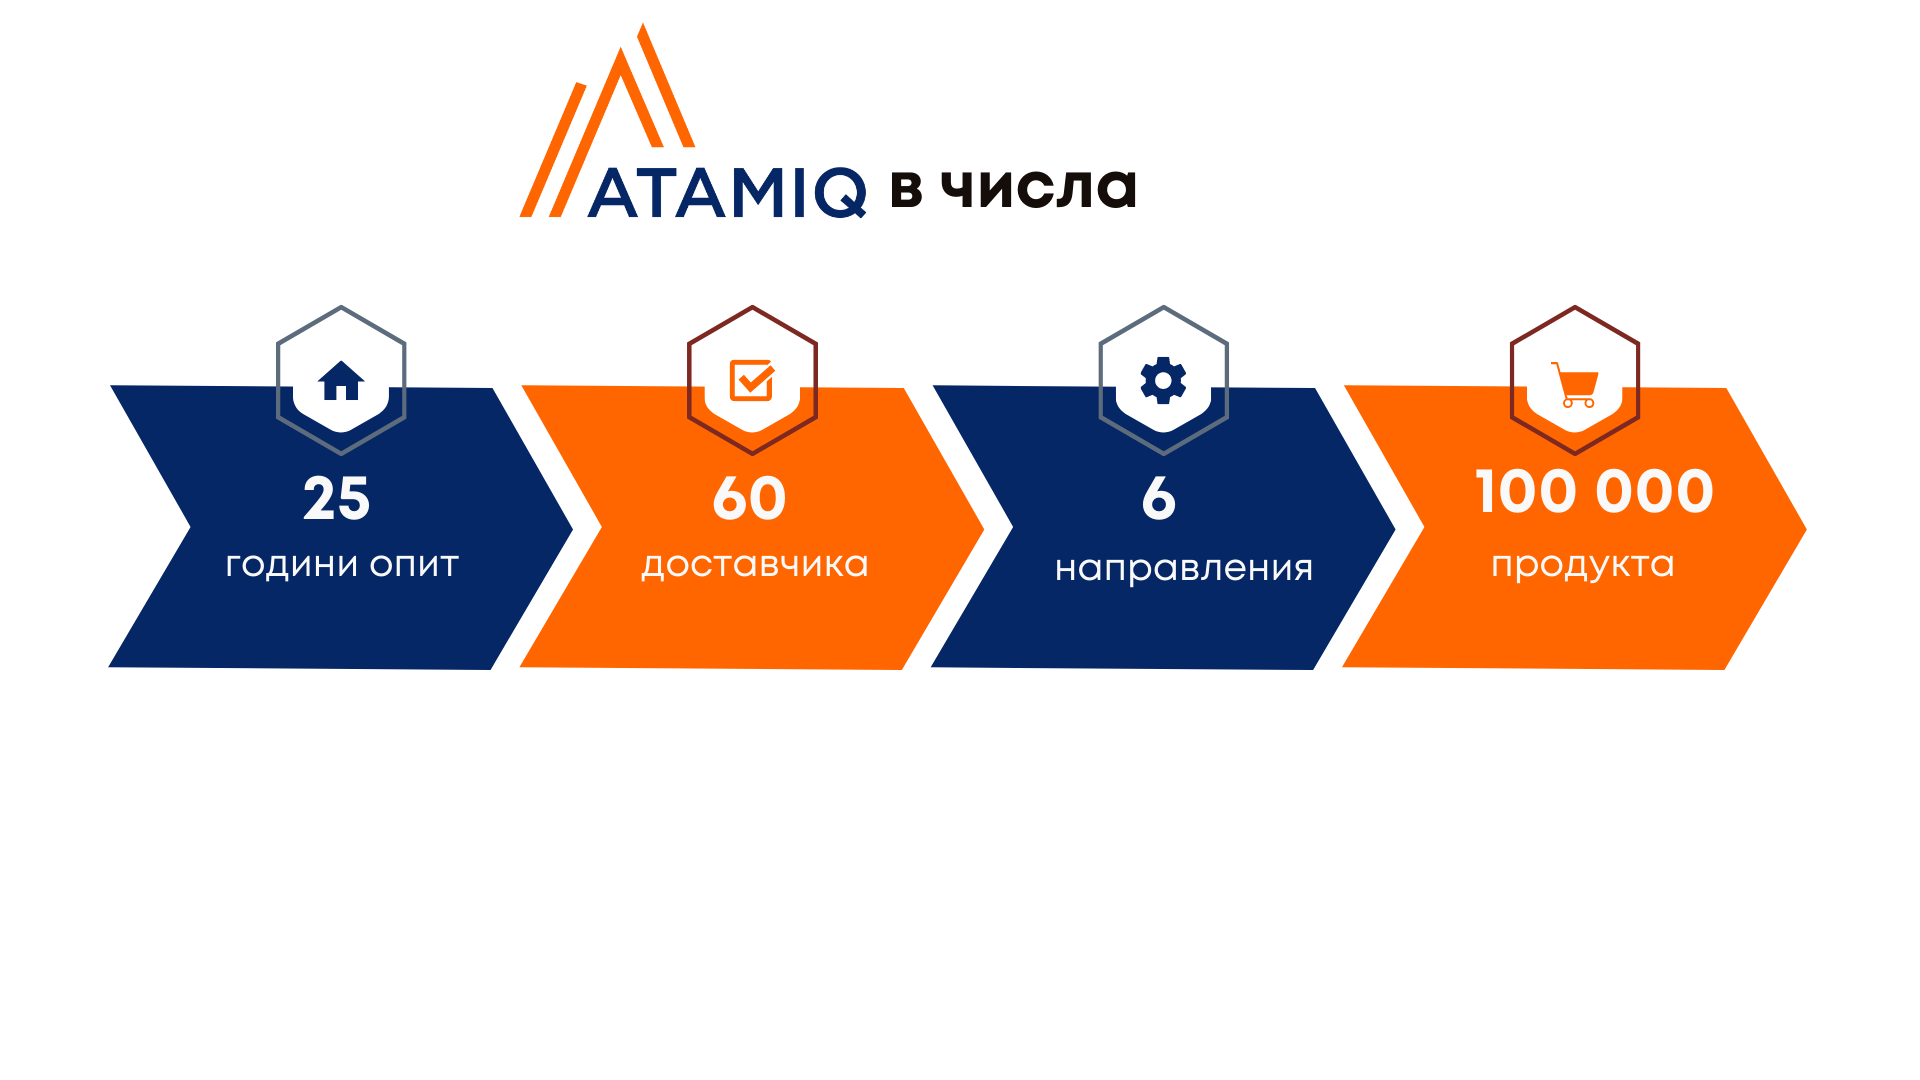 ATAMIQ supply chain